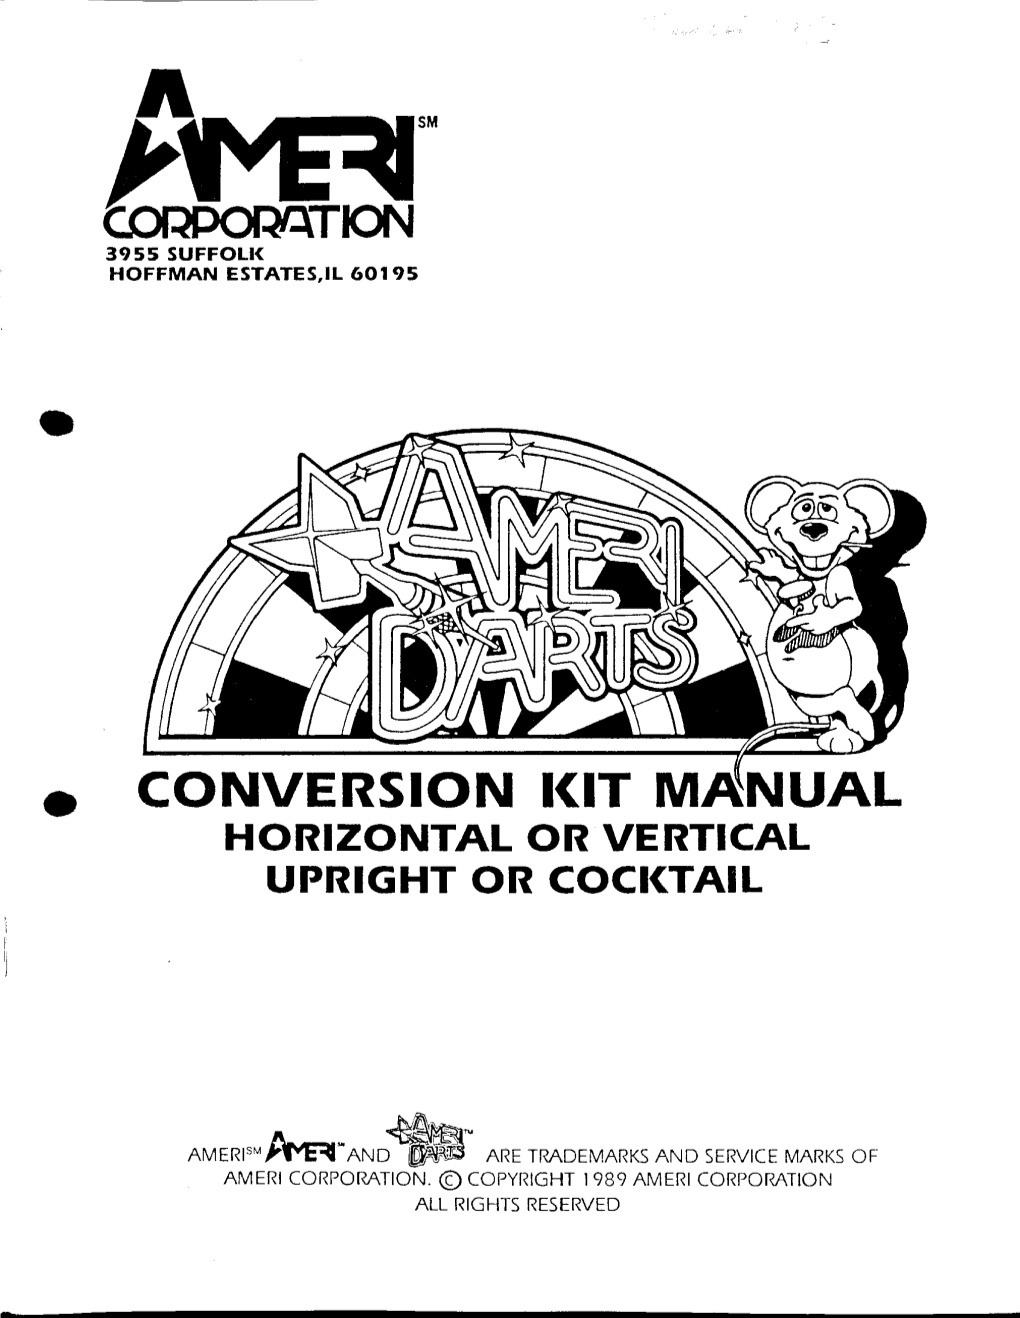 Conversion Kit Manual